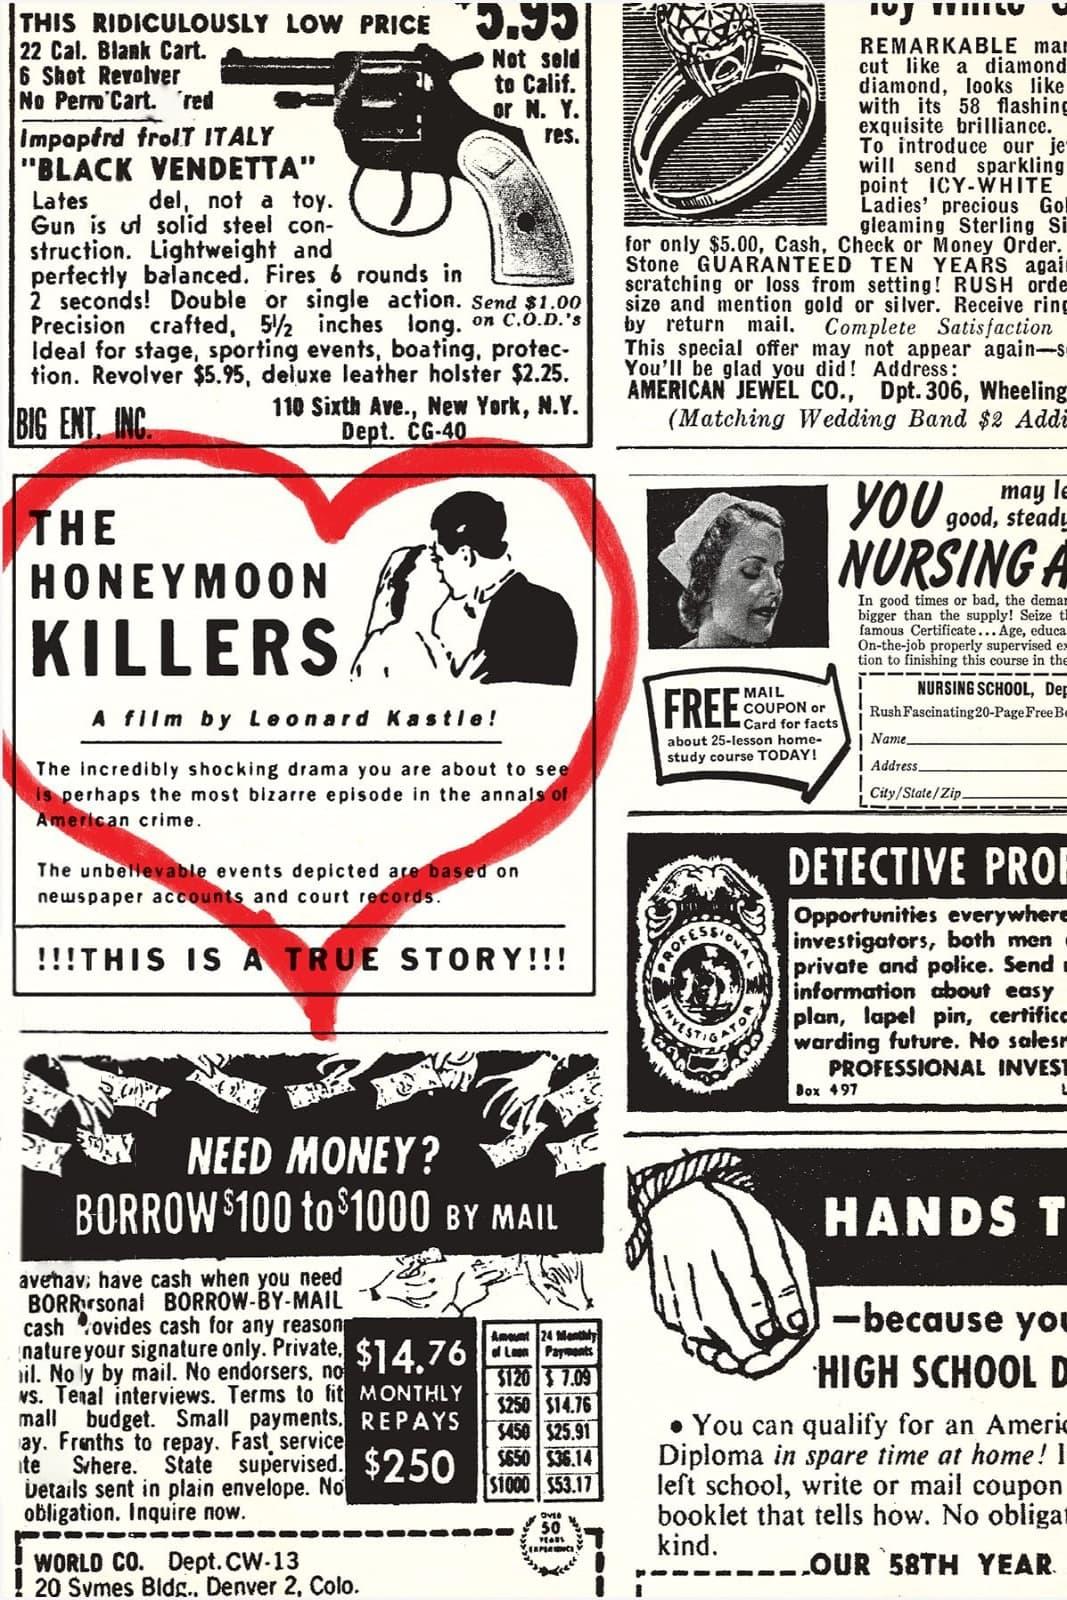 The Honeymoon Killers poster